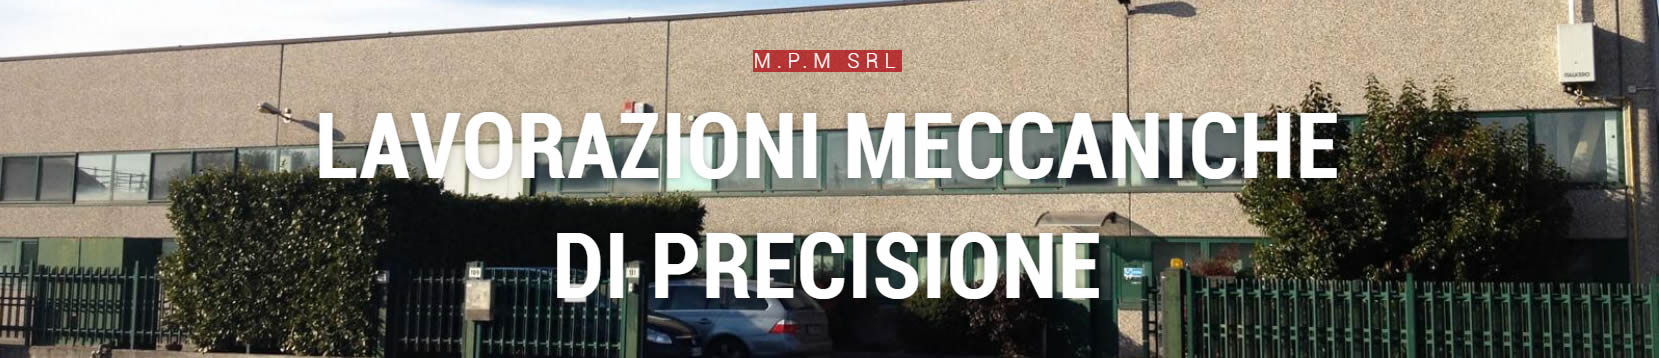 Officina meccanica di precisione Casorate Sempione MPM srl